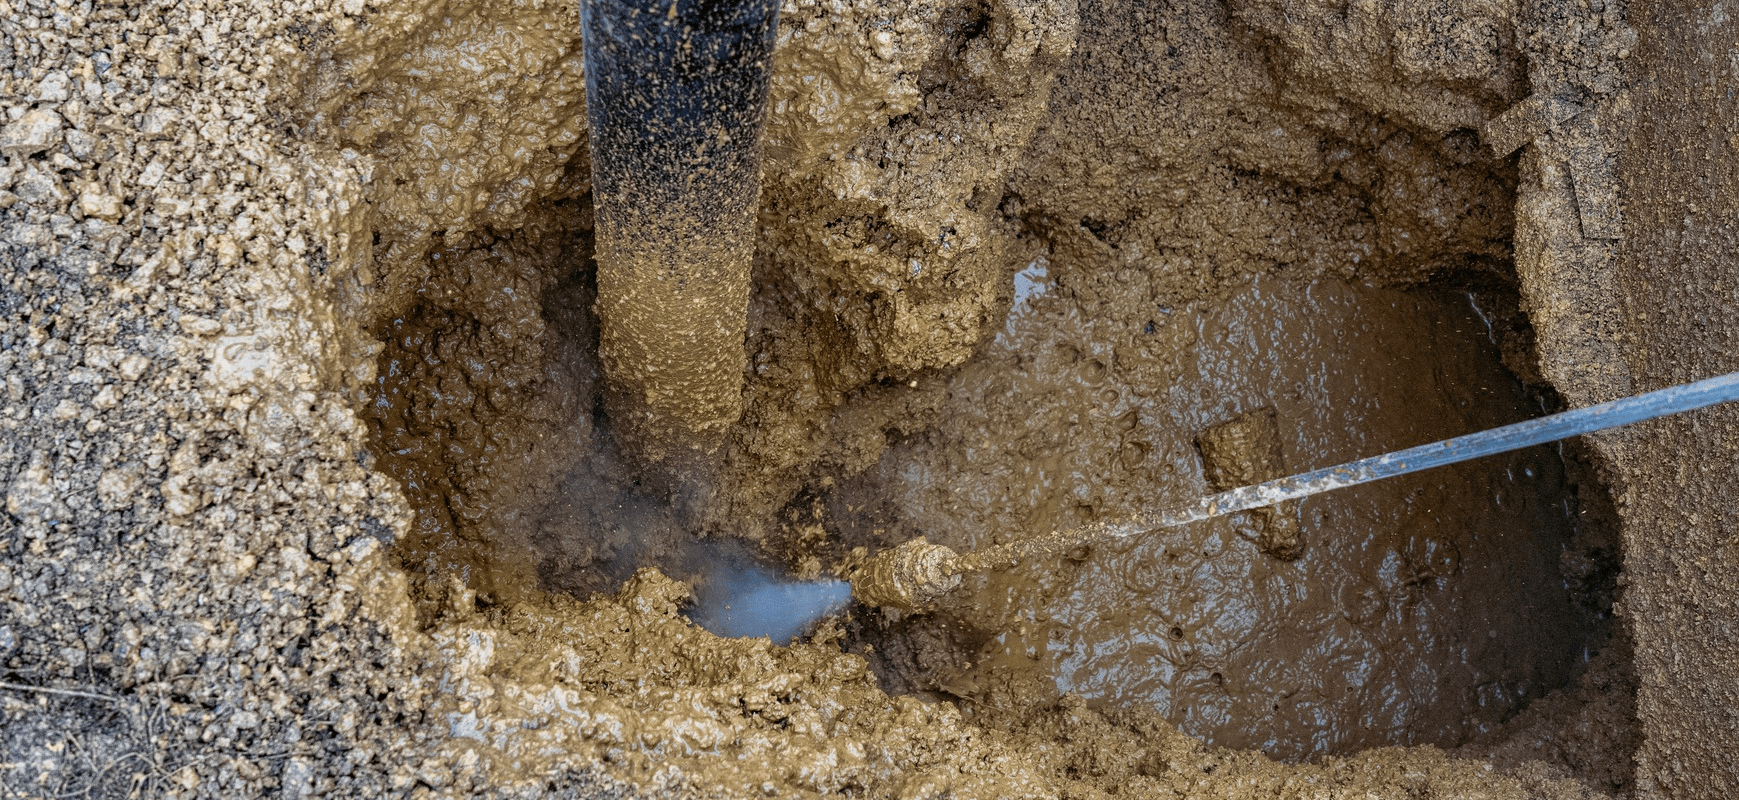 Utility Digging Vernon, CT